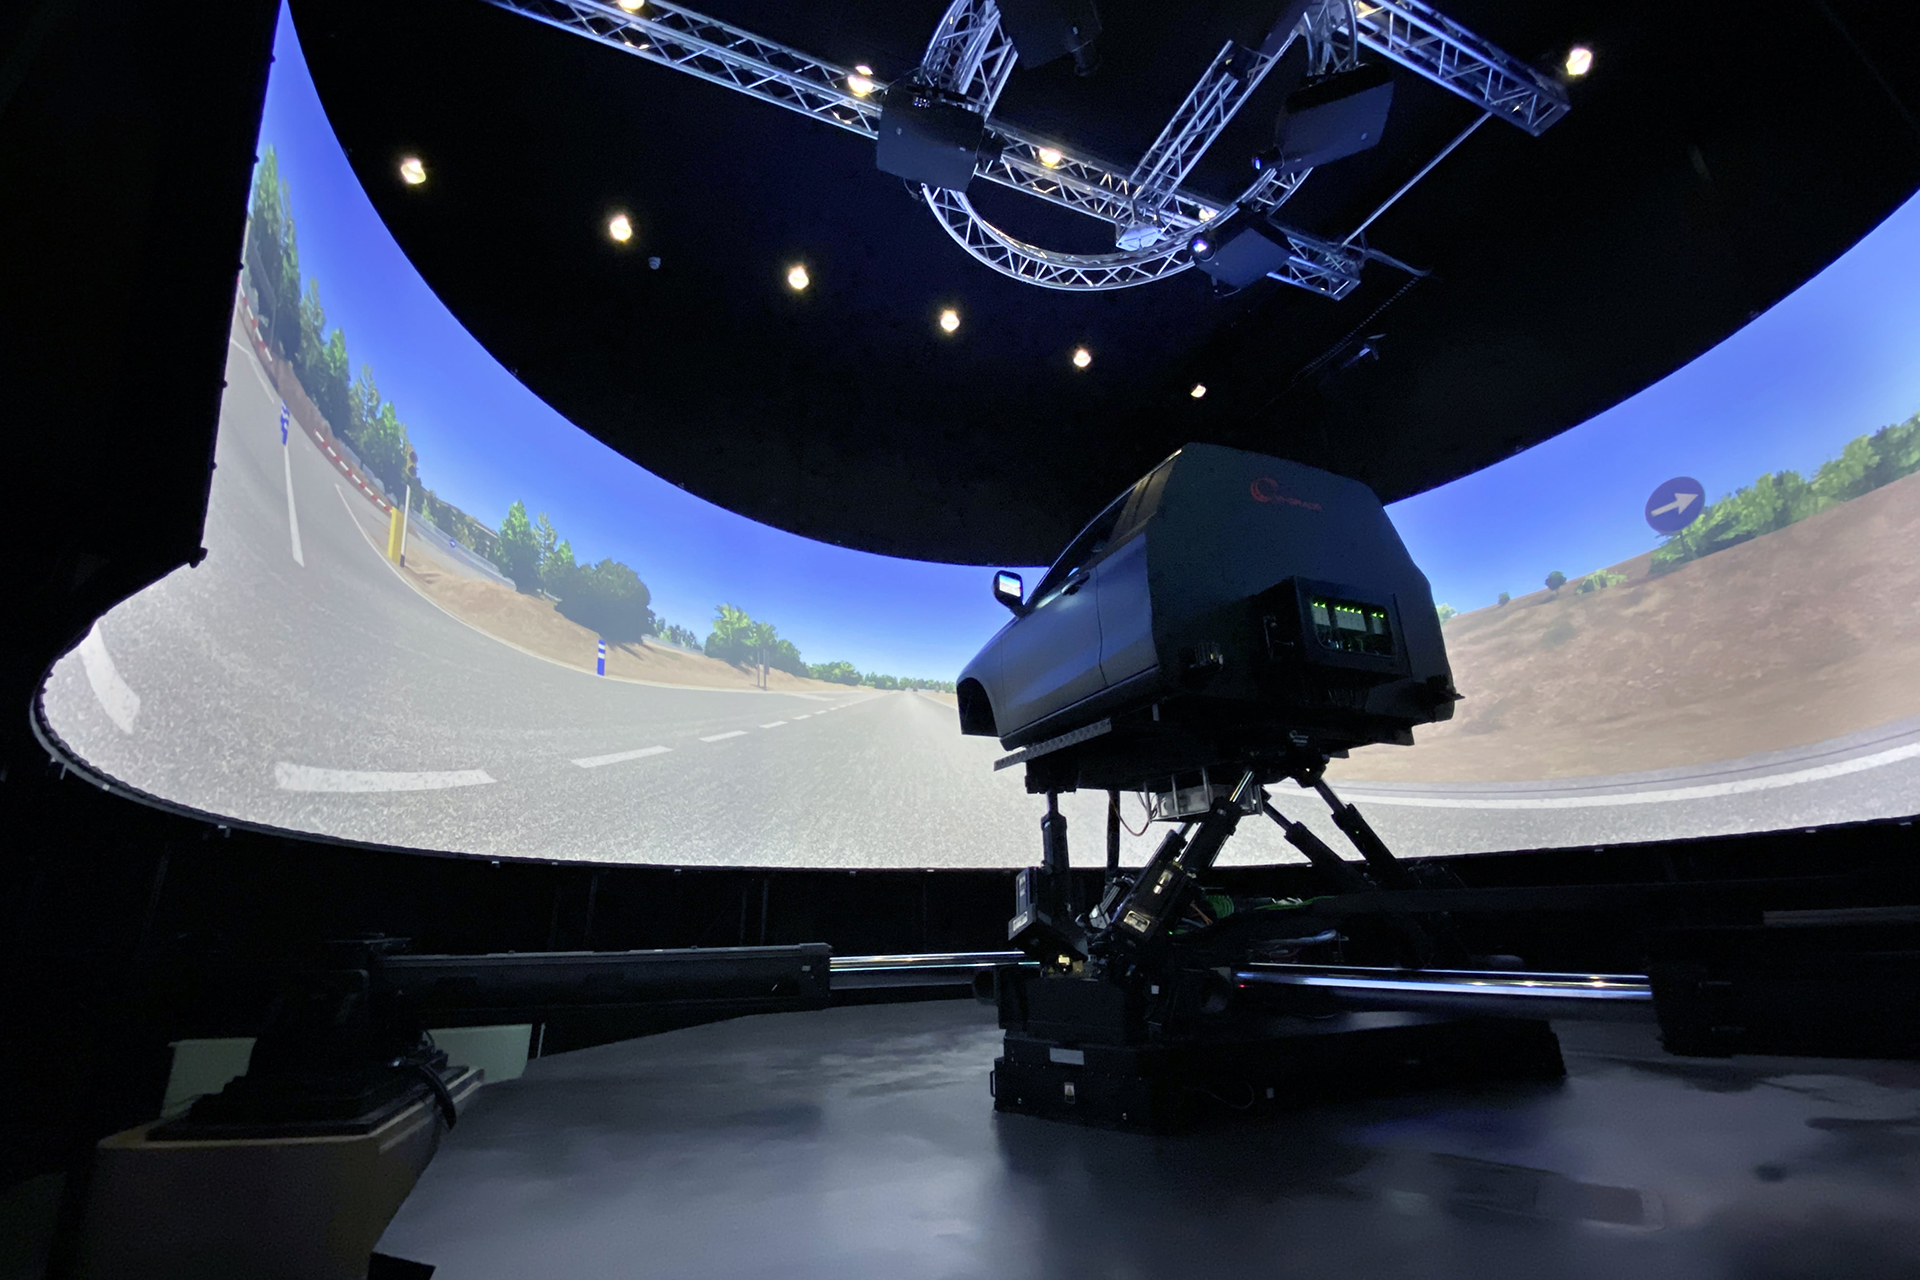 VI-grade Announces Installation of DiM250 DYNAMIC Driving Simulator at Ford  Motor Company